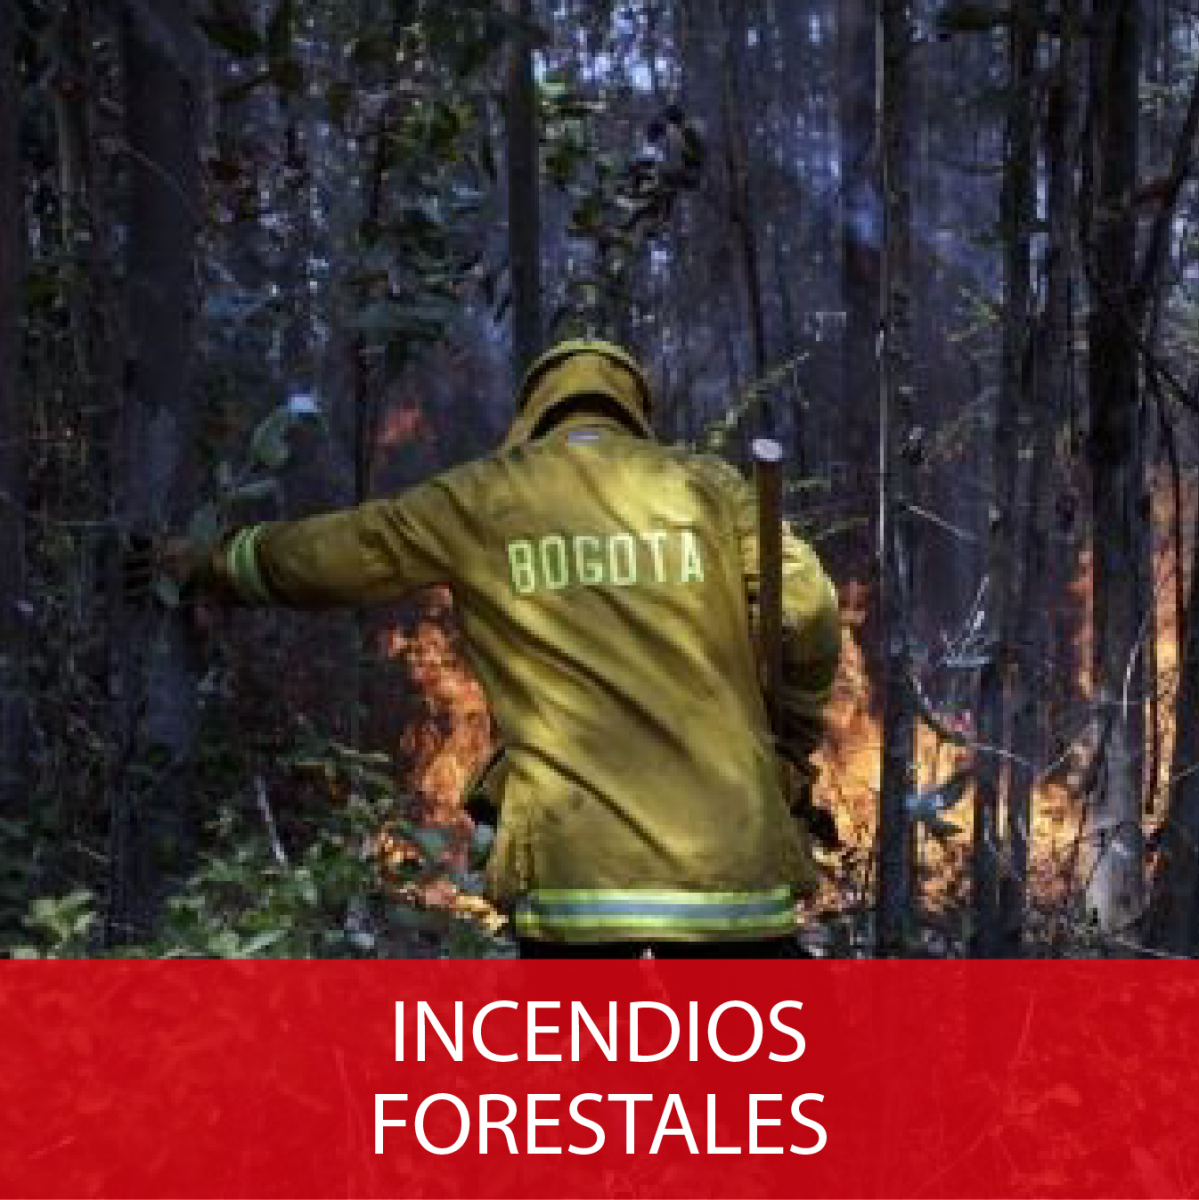 Incendios Forestales Bogotá